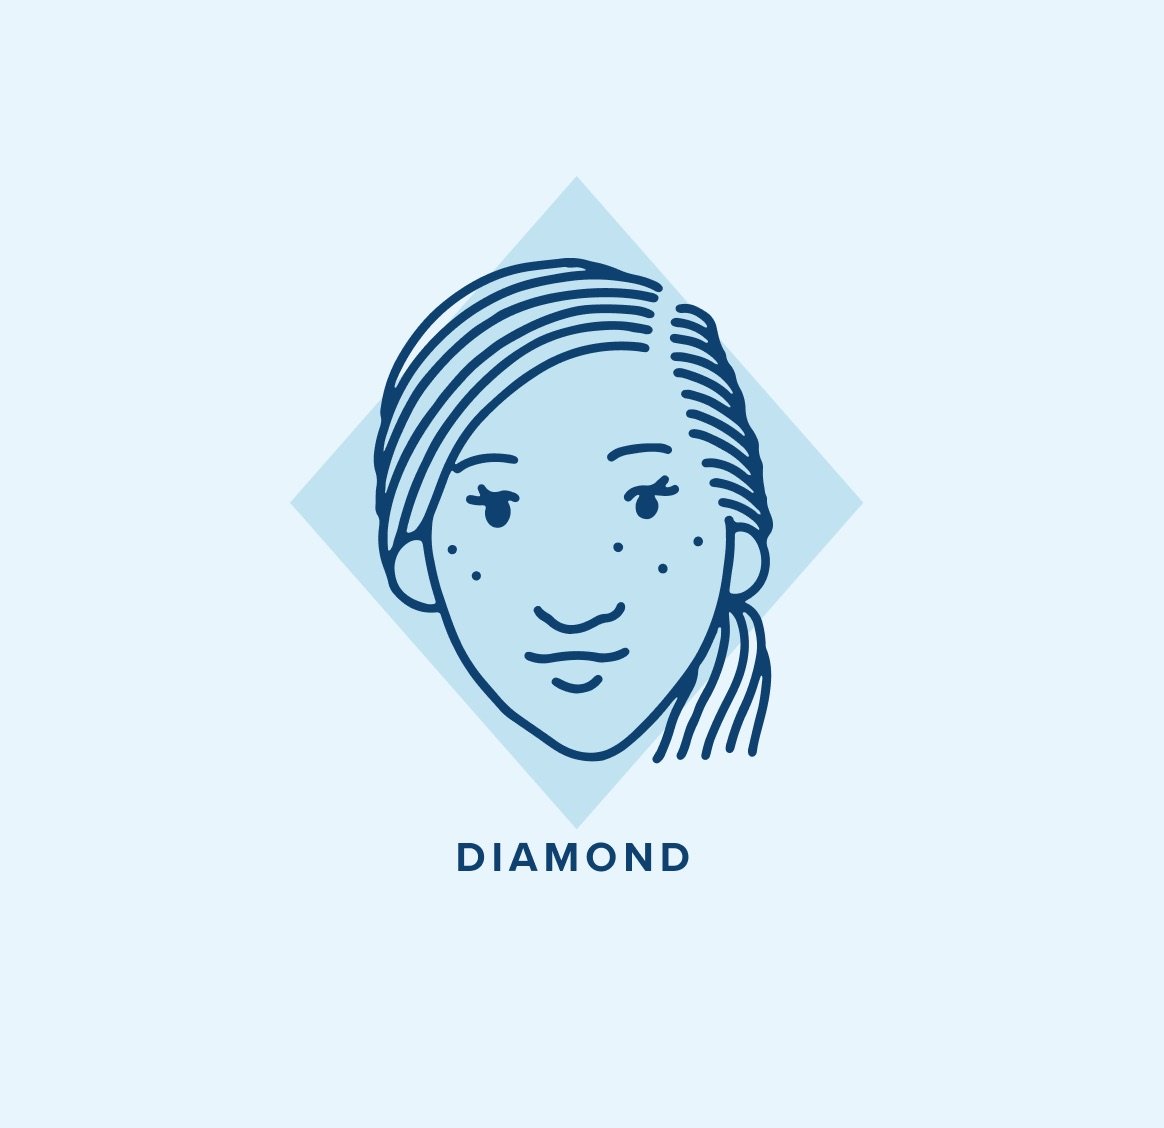 Illustration of a diamond face shape